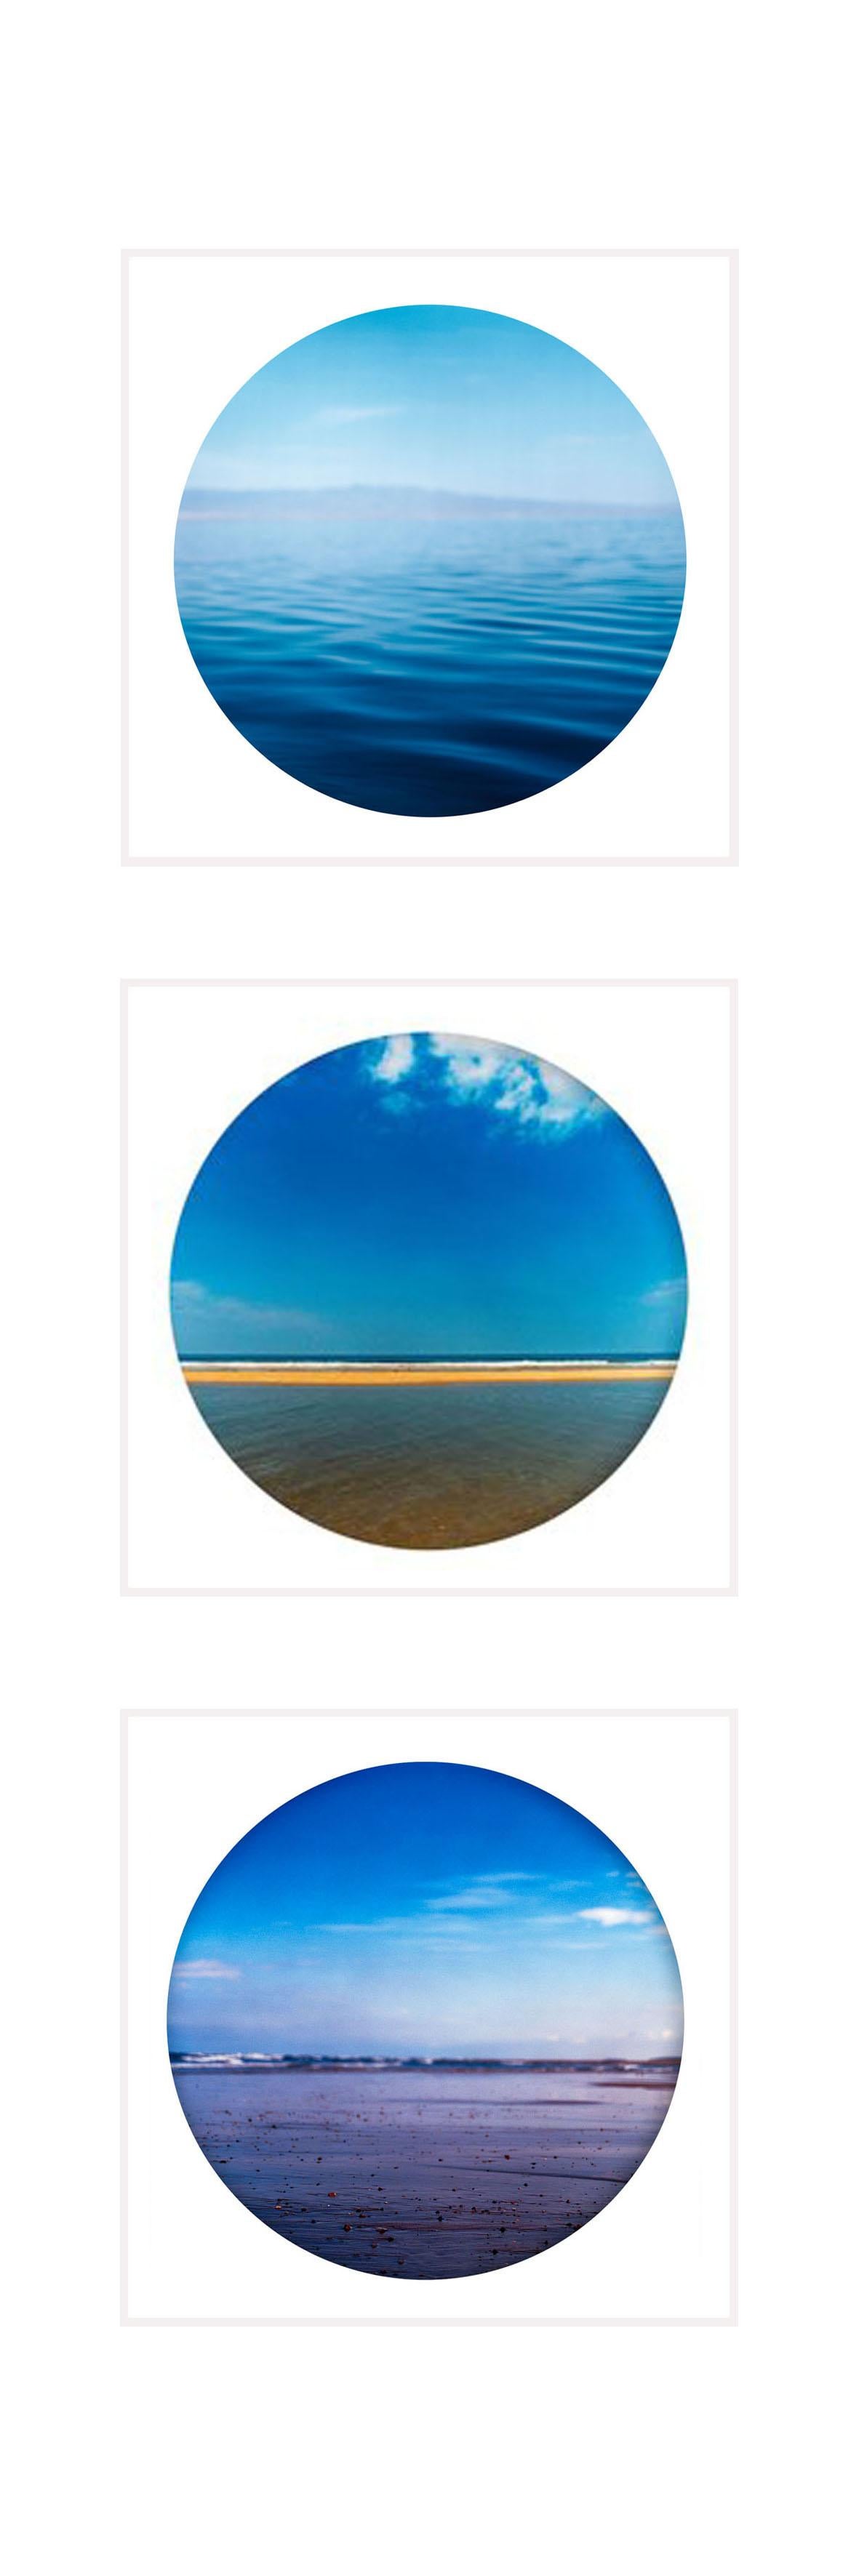 Porthole Trio - Contemporary, Circle, Waterscape Color Photography - Blue Landscape Photograph by Richard Heeps